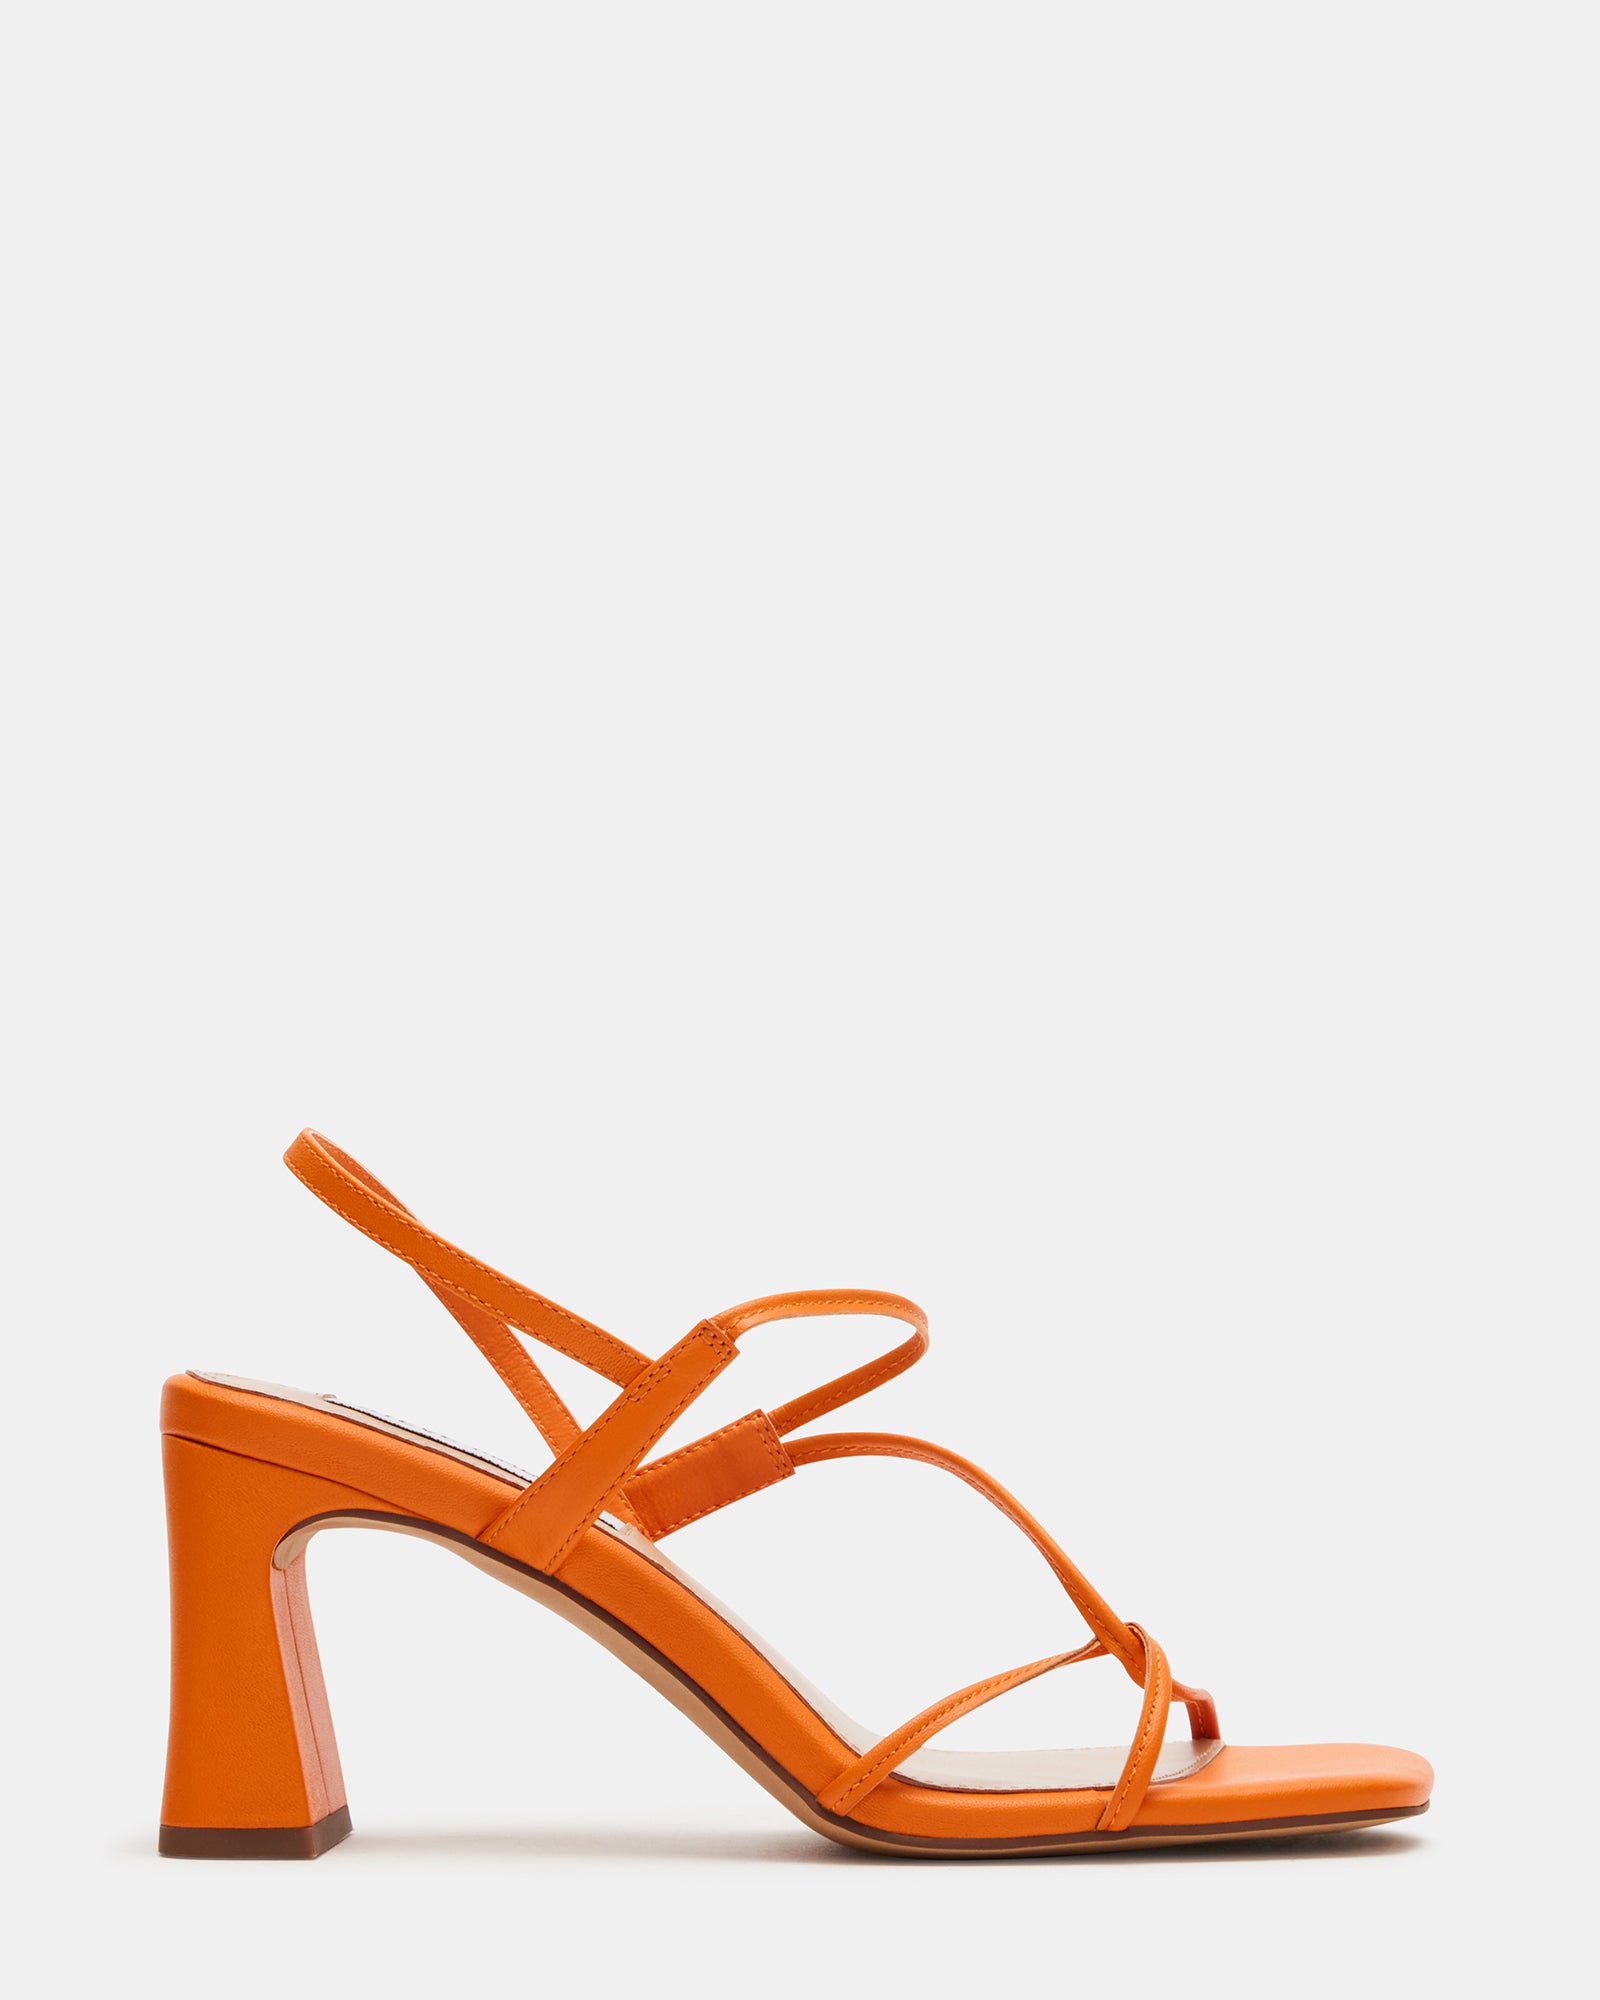 VALORA Orange Leather Strappy Square Toe Heel | Women's Heels – Steve ...